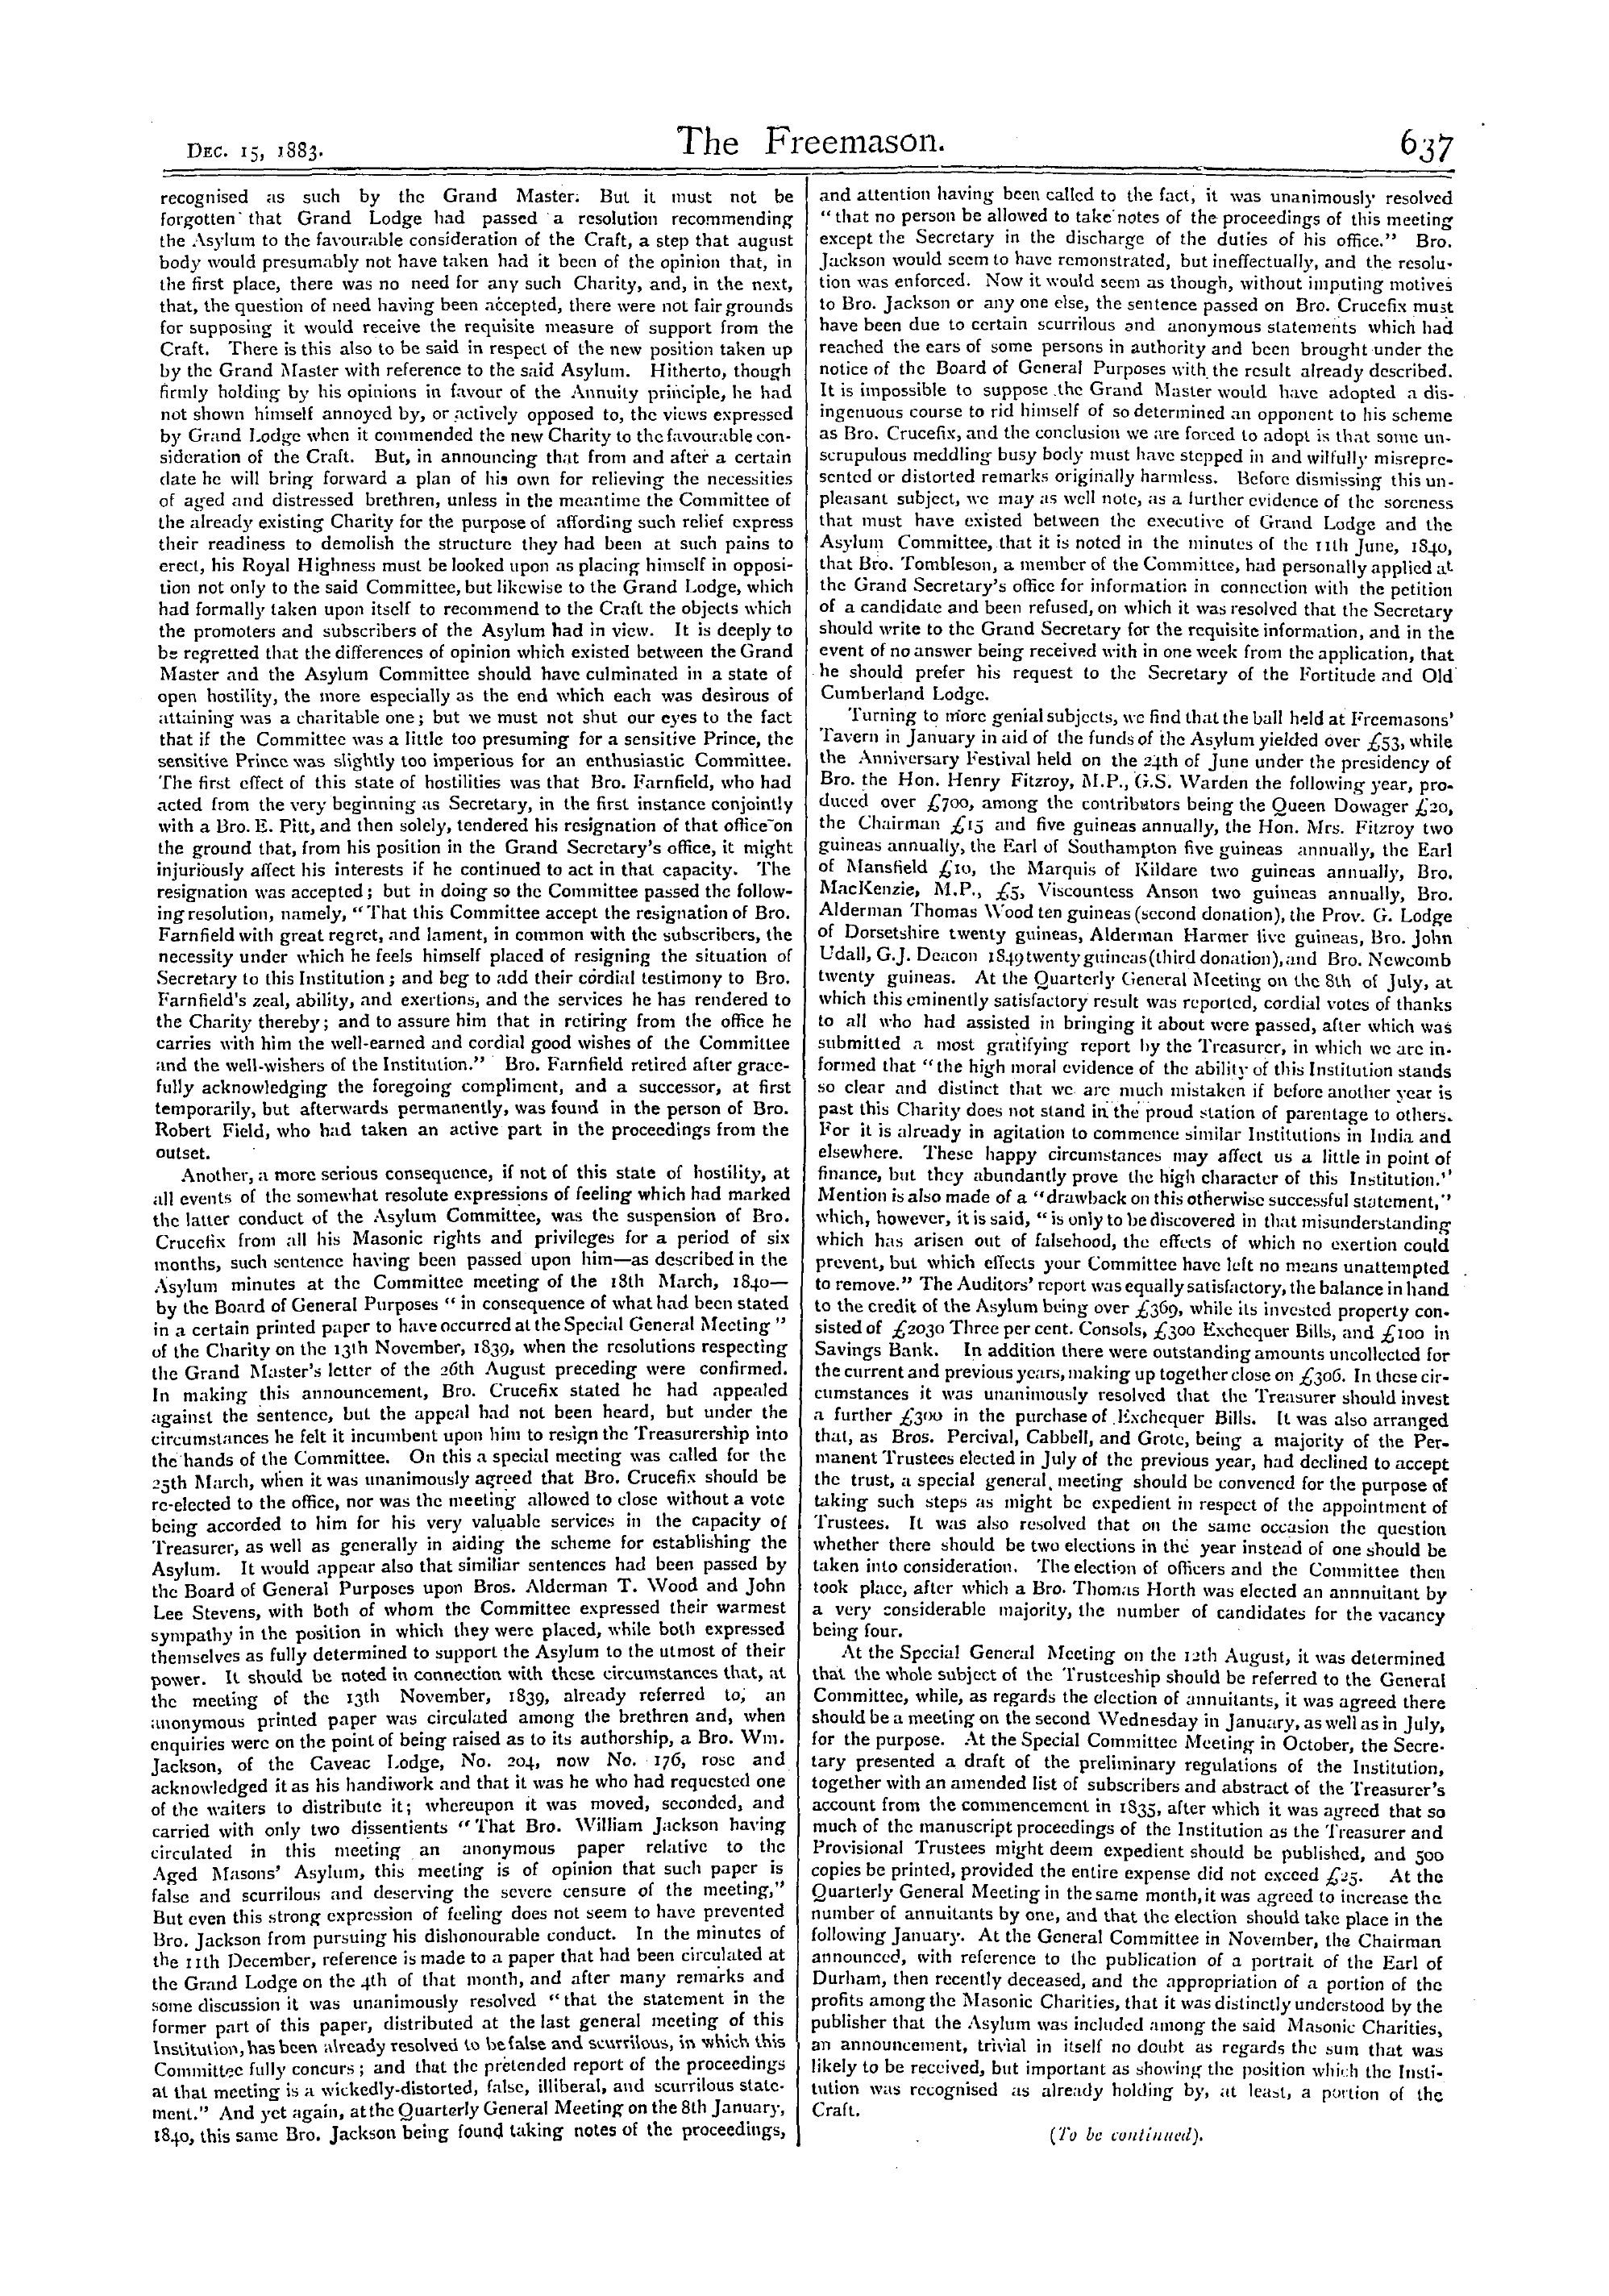 The Freemason: 1883-12-15: 5